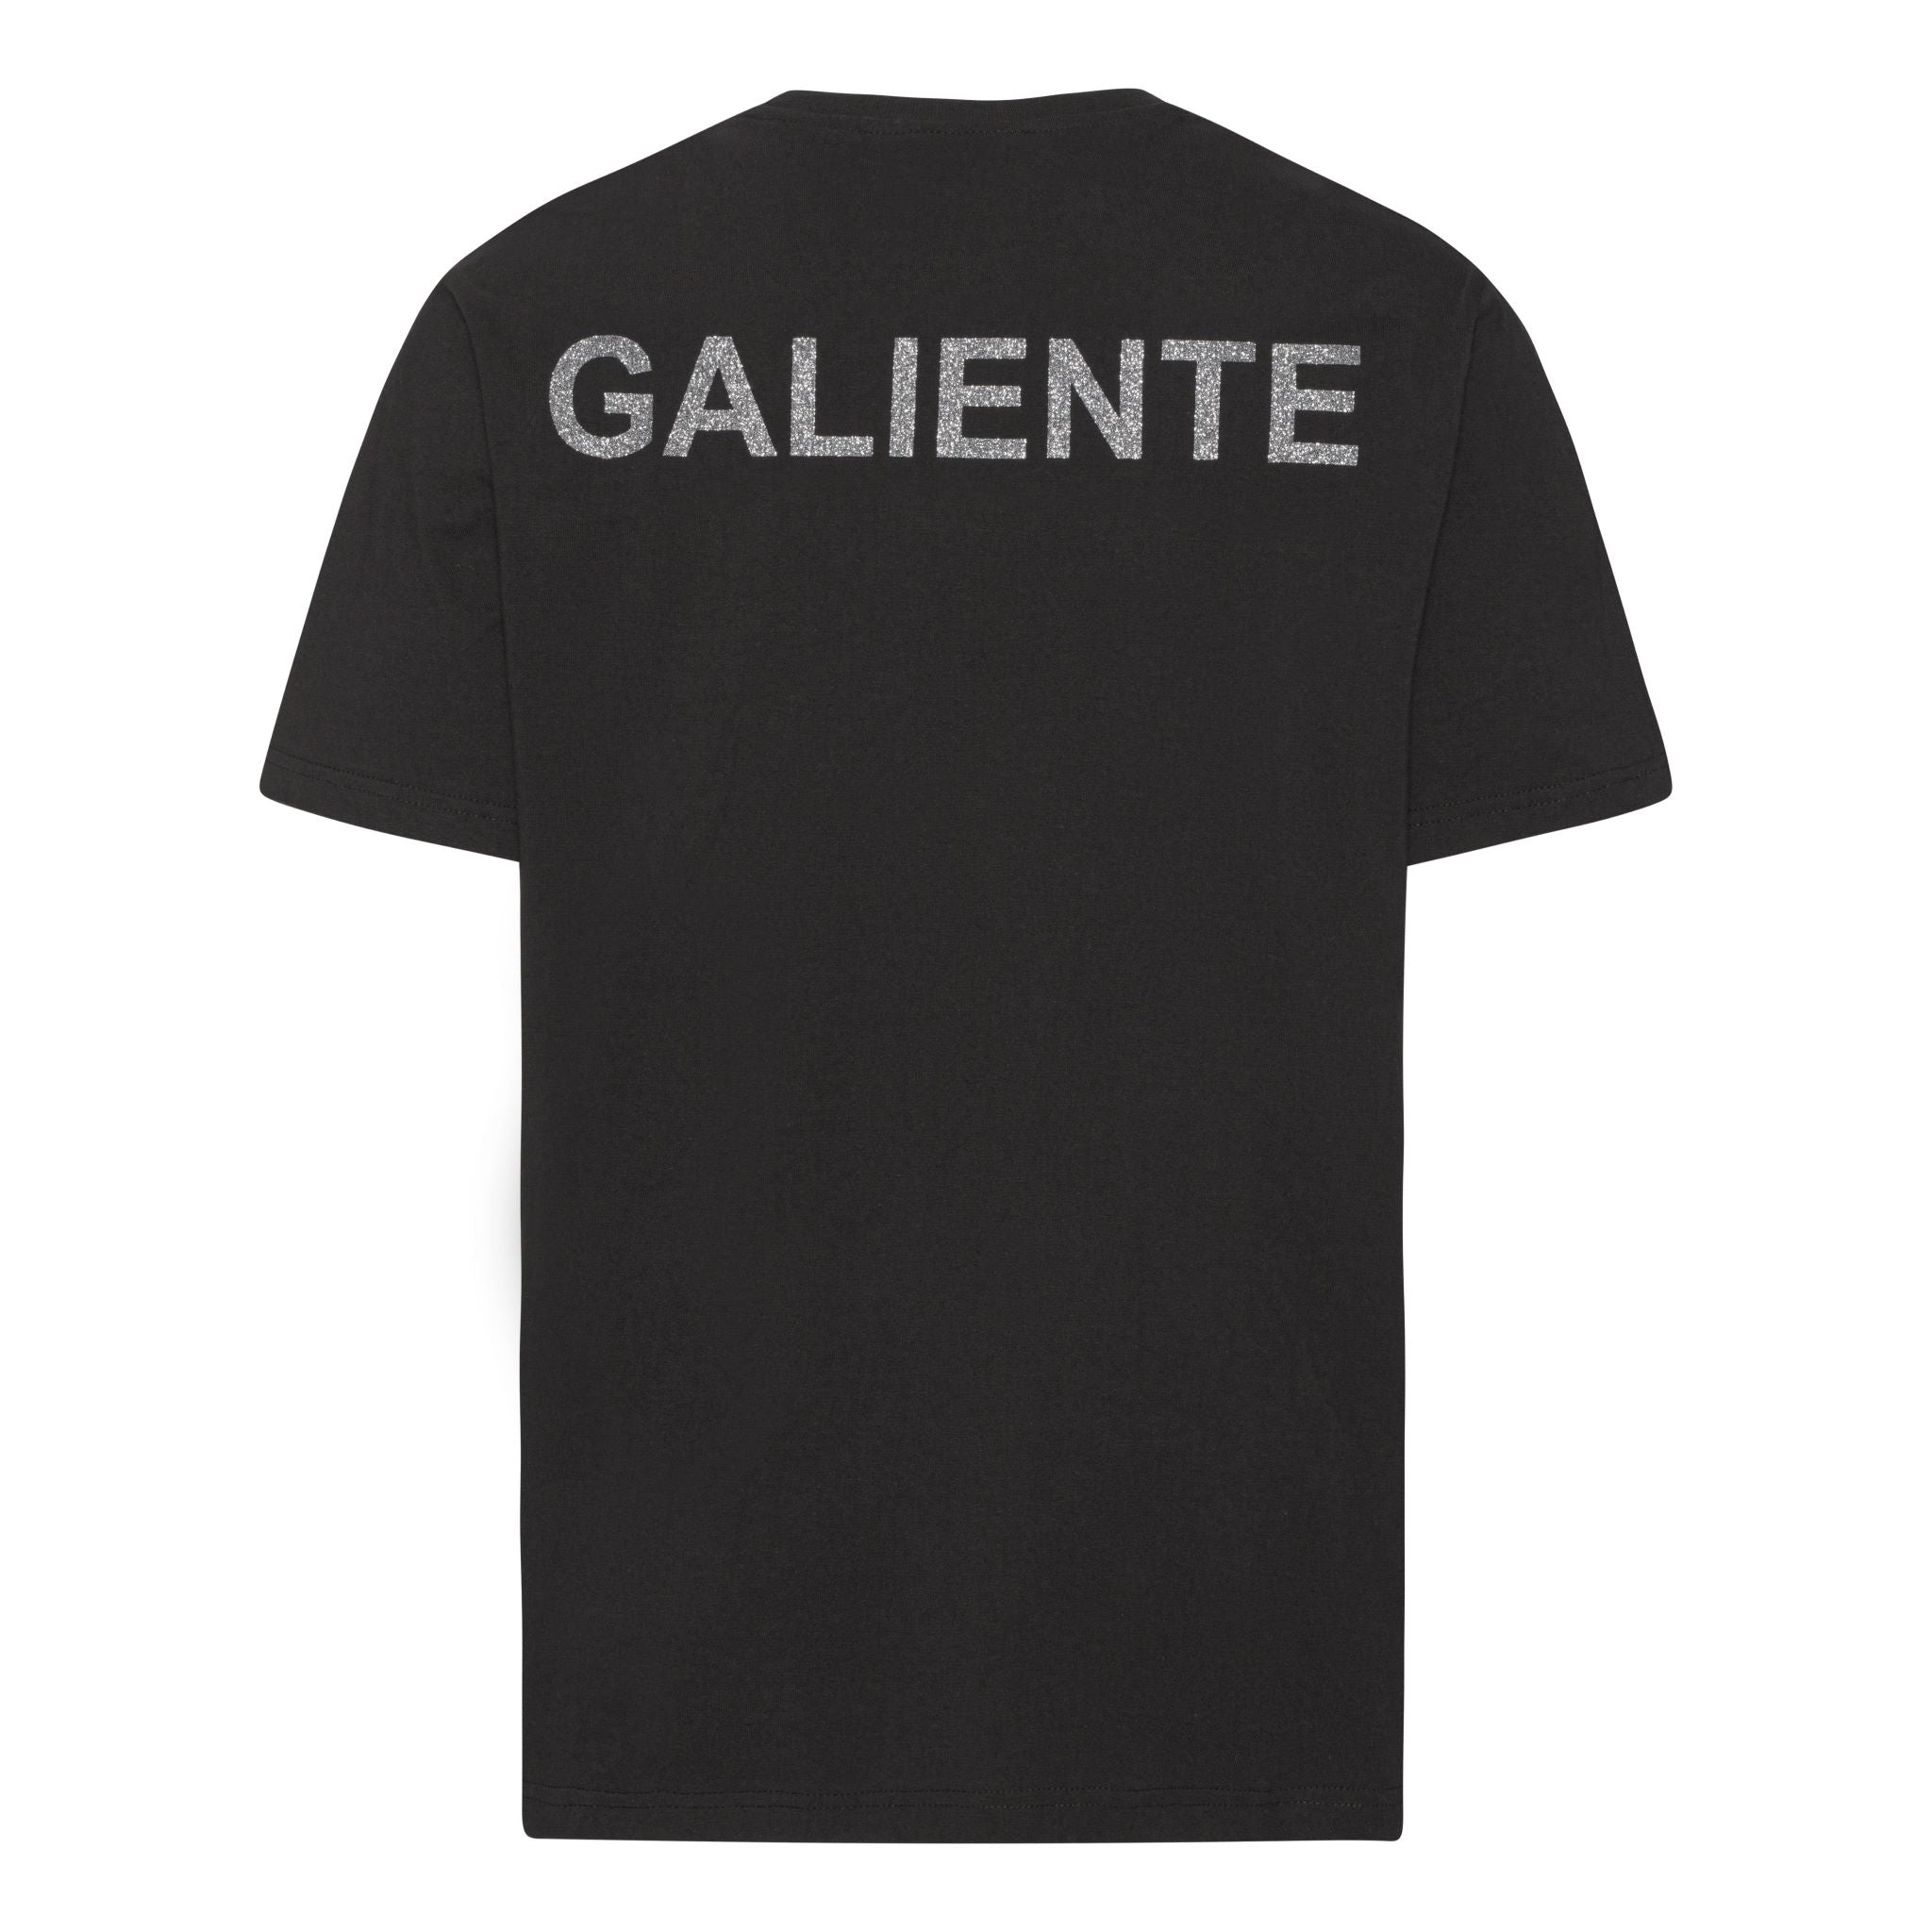 Oversize black T-shirt with glitter logo print